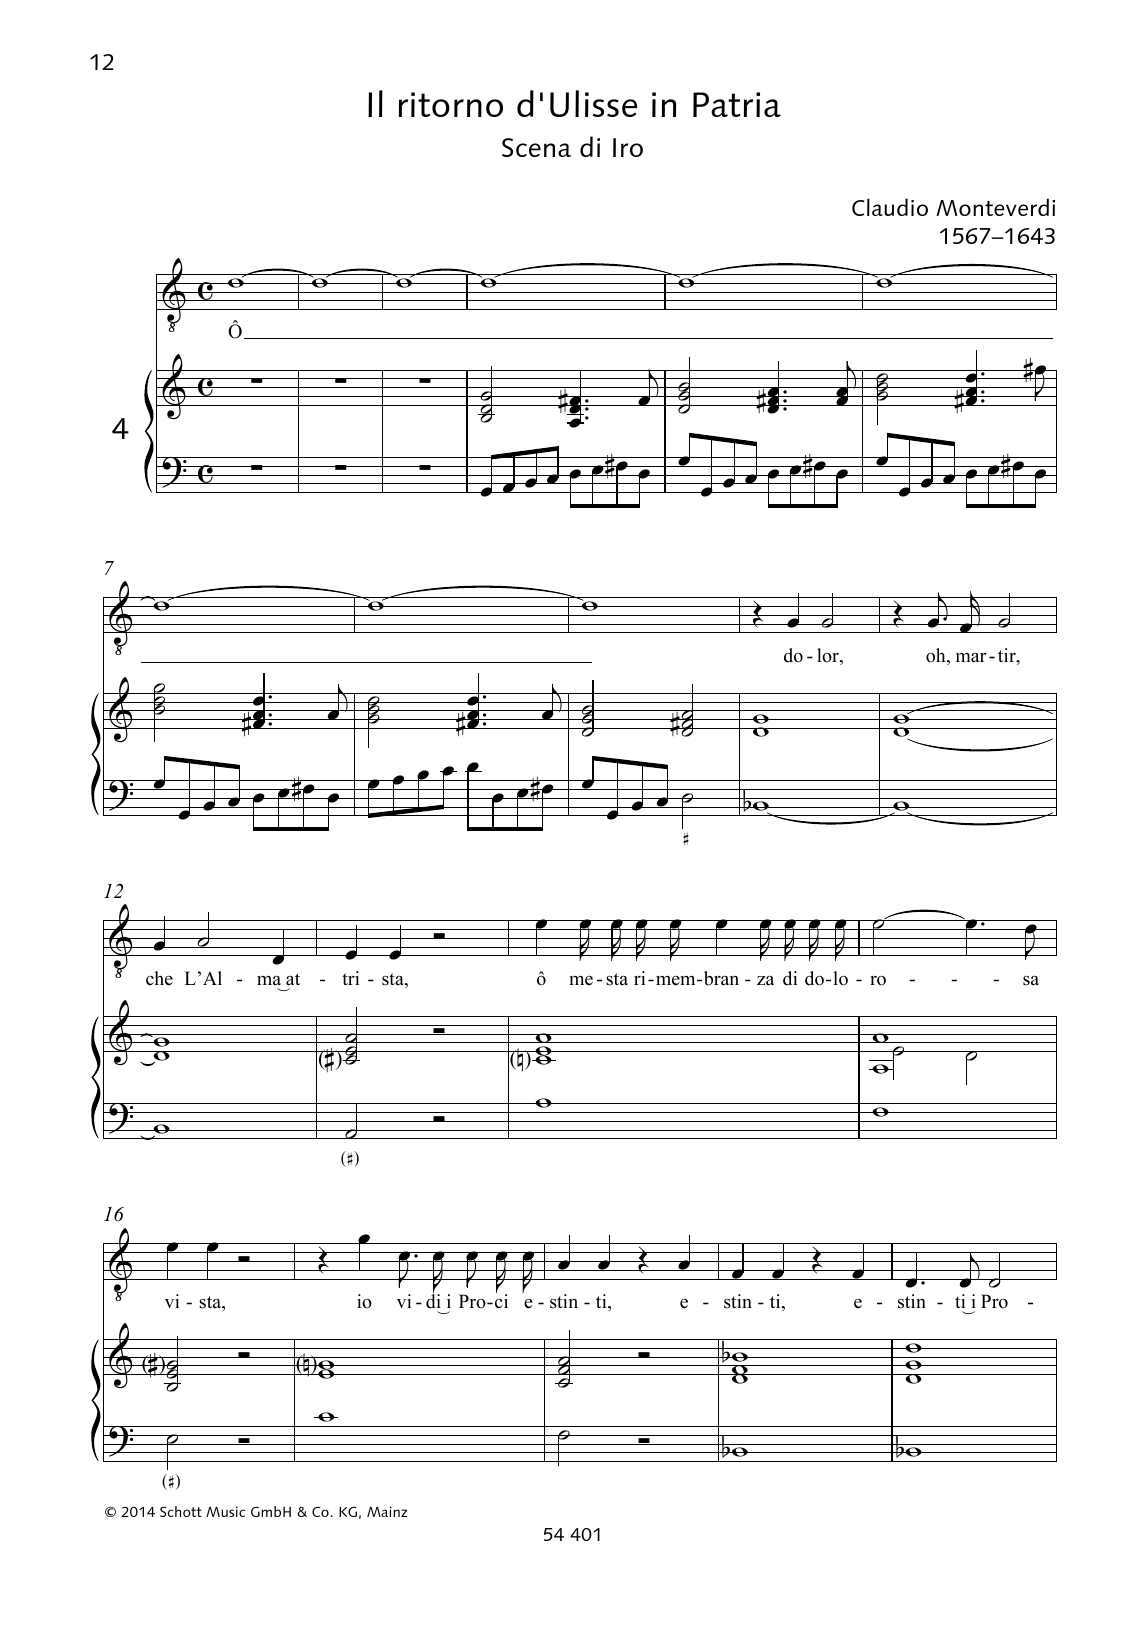 Claudio Monteverdi ?? dolor, oh, martir Sheet Music Notes & Chords for Piano & Vocal - Download or Print PDF